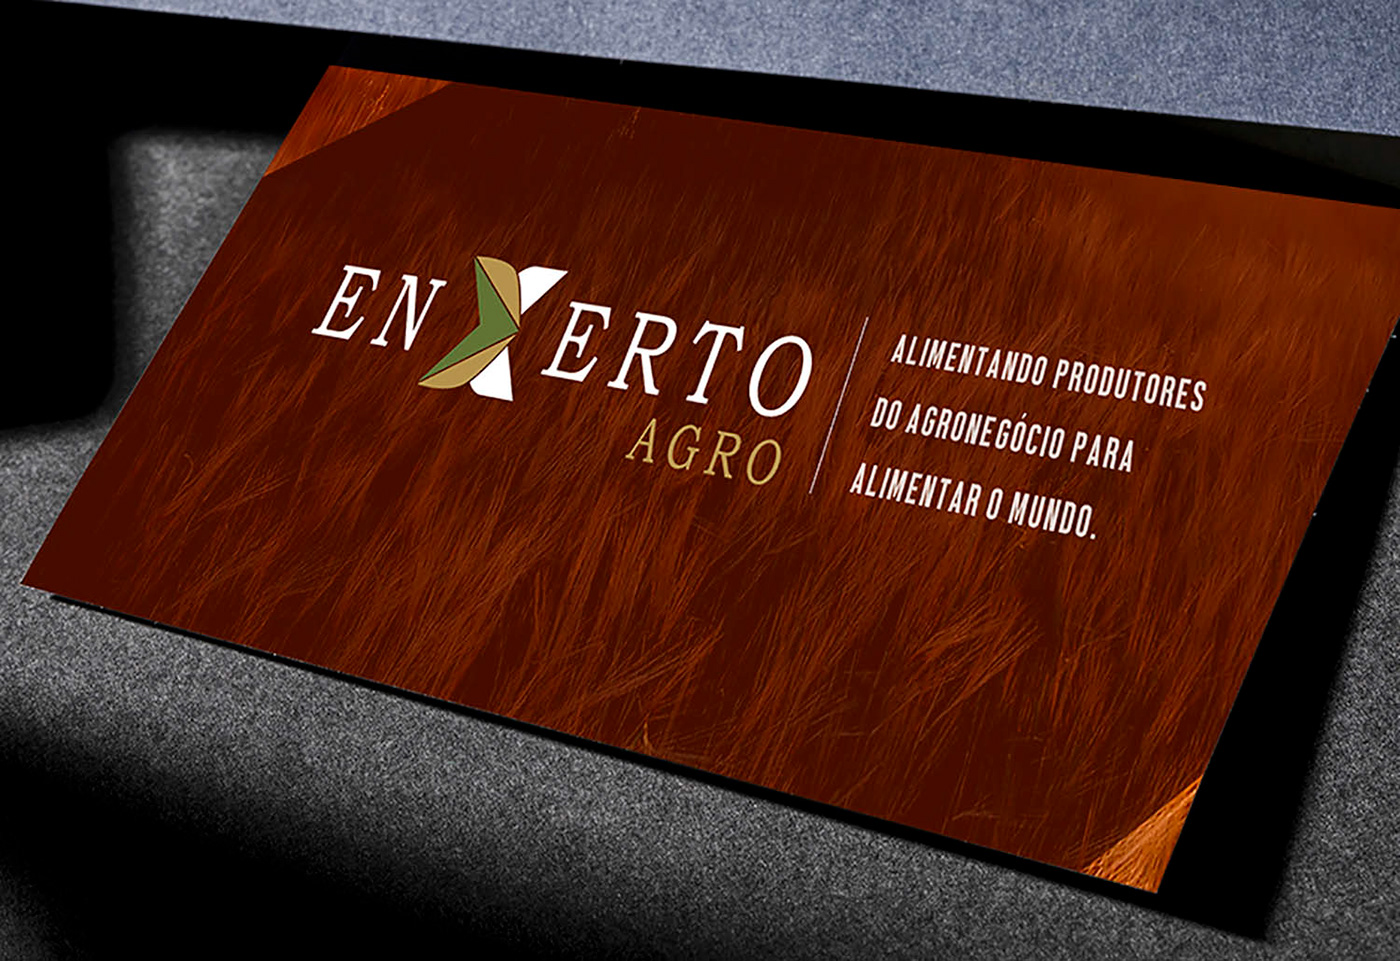 Agribusiness agricultura Agro Agronegócios branding  campo design designdemarcas logodesign Plant